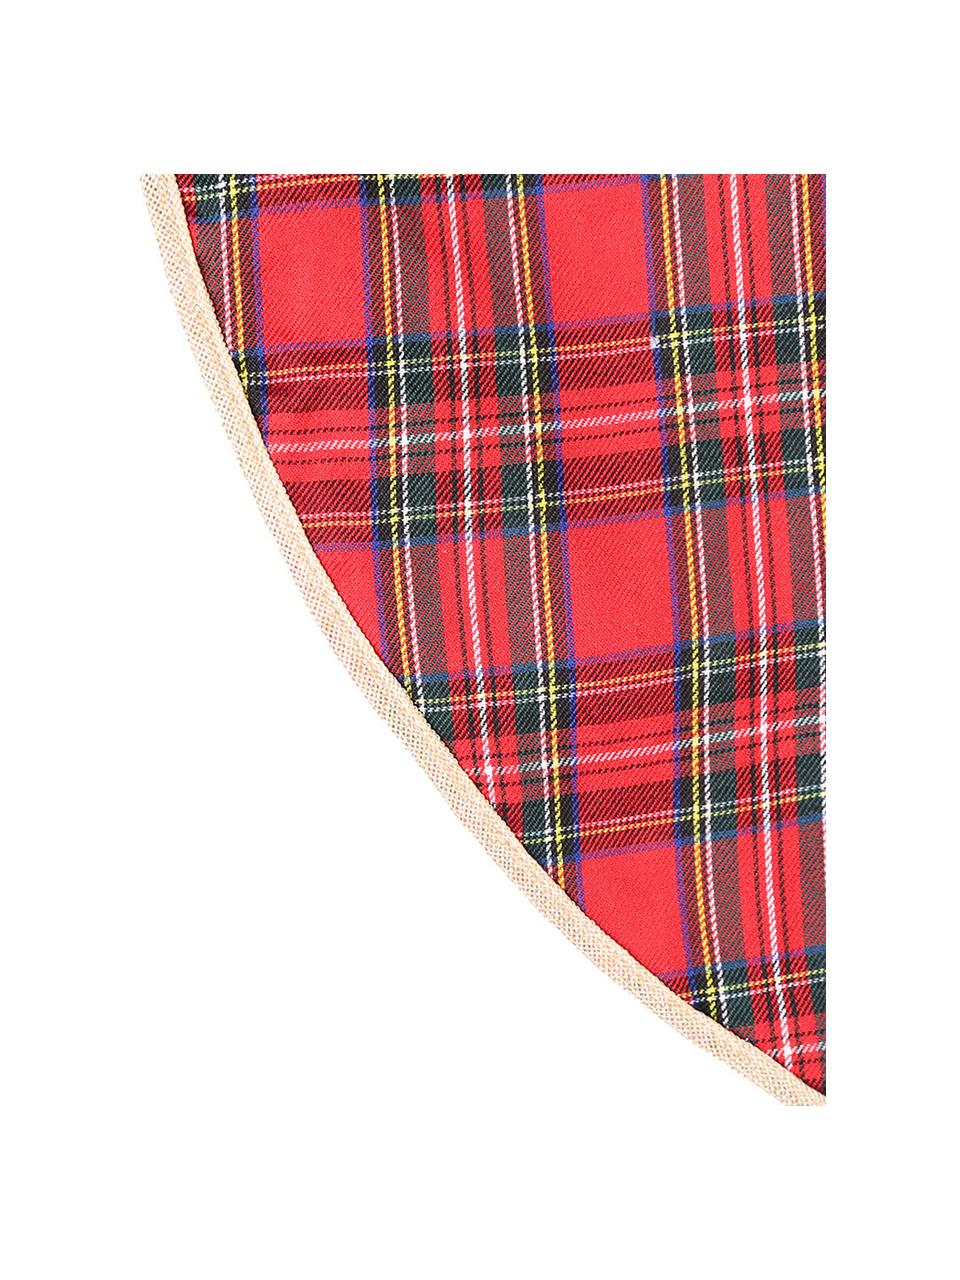 Falda para pie de árbol Escocesa, Textil, Rojo, natural, Ø 95 cm